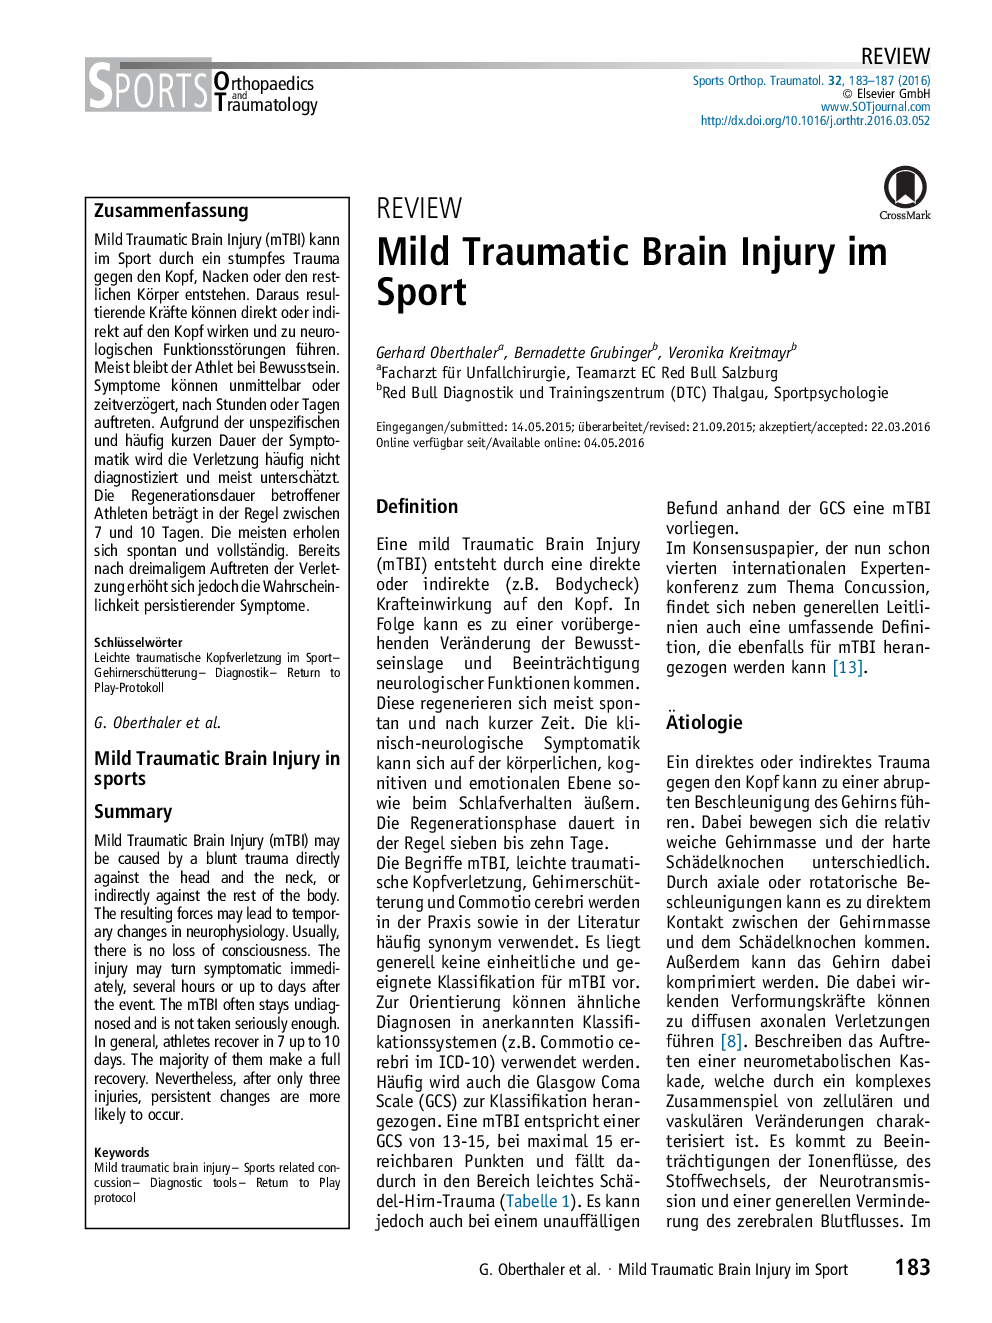 Mild Traumatic Brain Injury im Sport